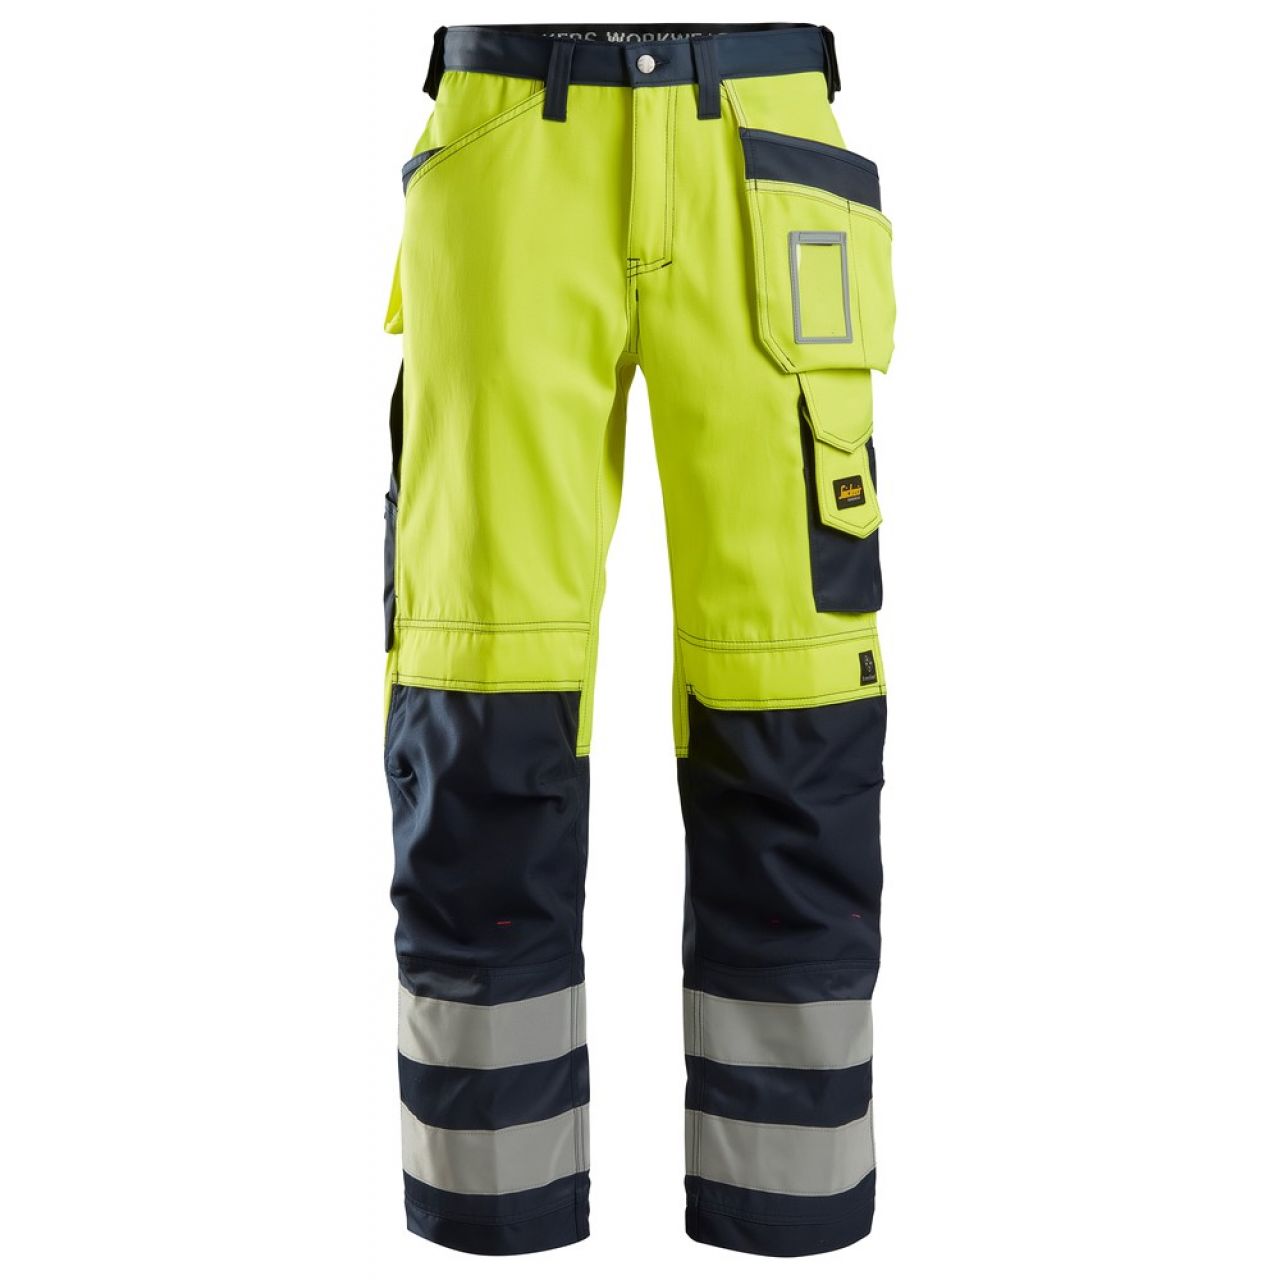 3233 Pantalones largos de trabajo de alta visibilidad clase 2 con bolsillos flotantes amarillo-azul marino talla 150